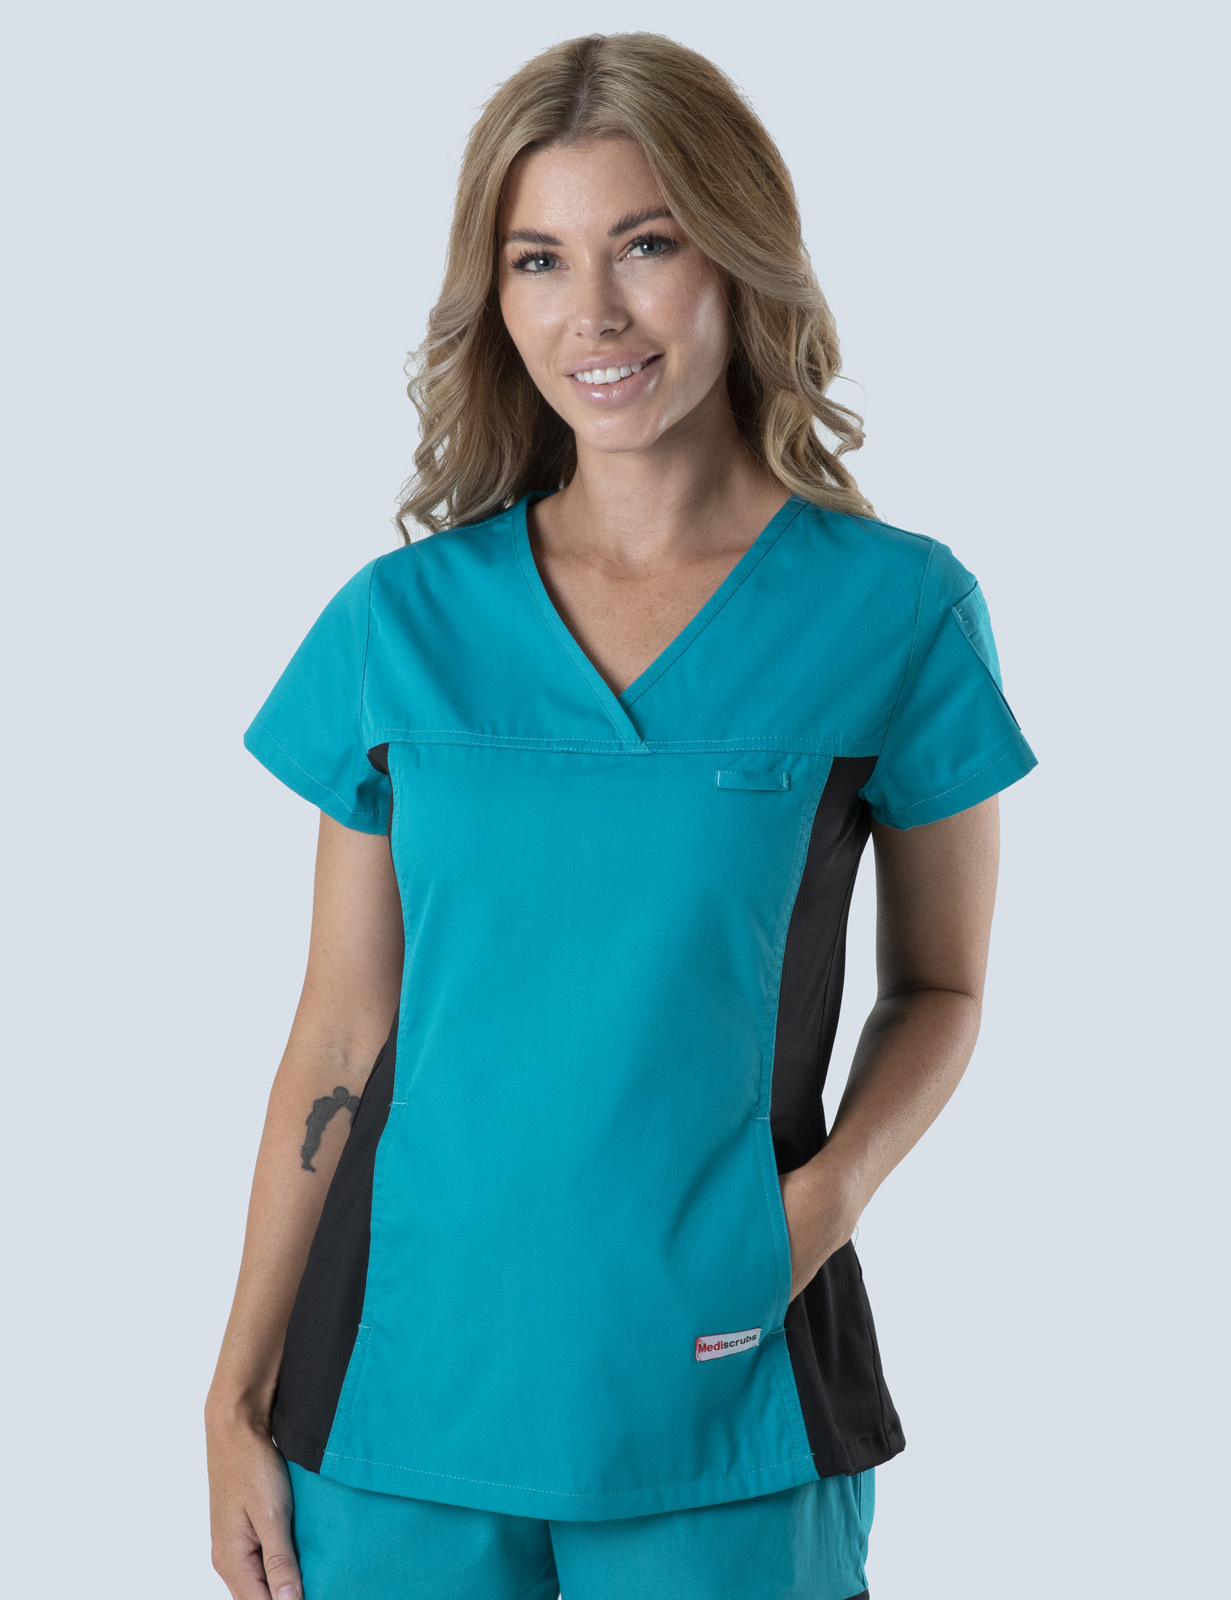 Palm Island Hospital - Nursing (Women's Fit Spandex Scrub Top in Teal incl Logos)